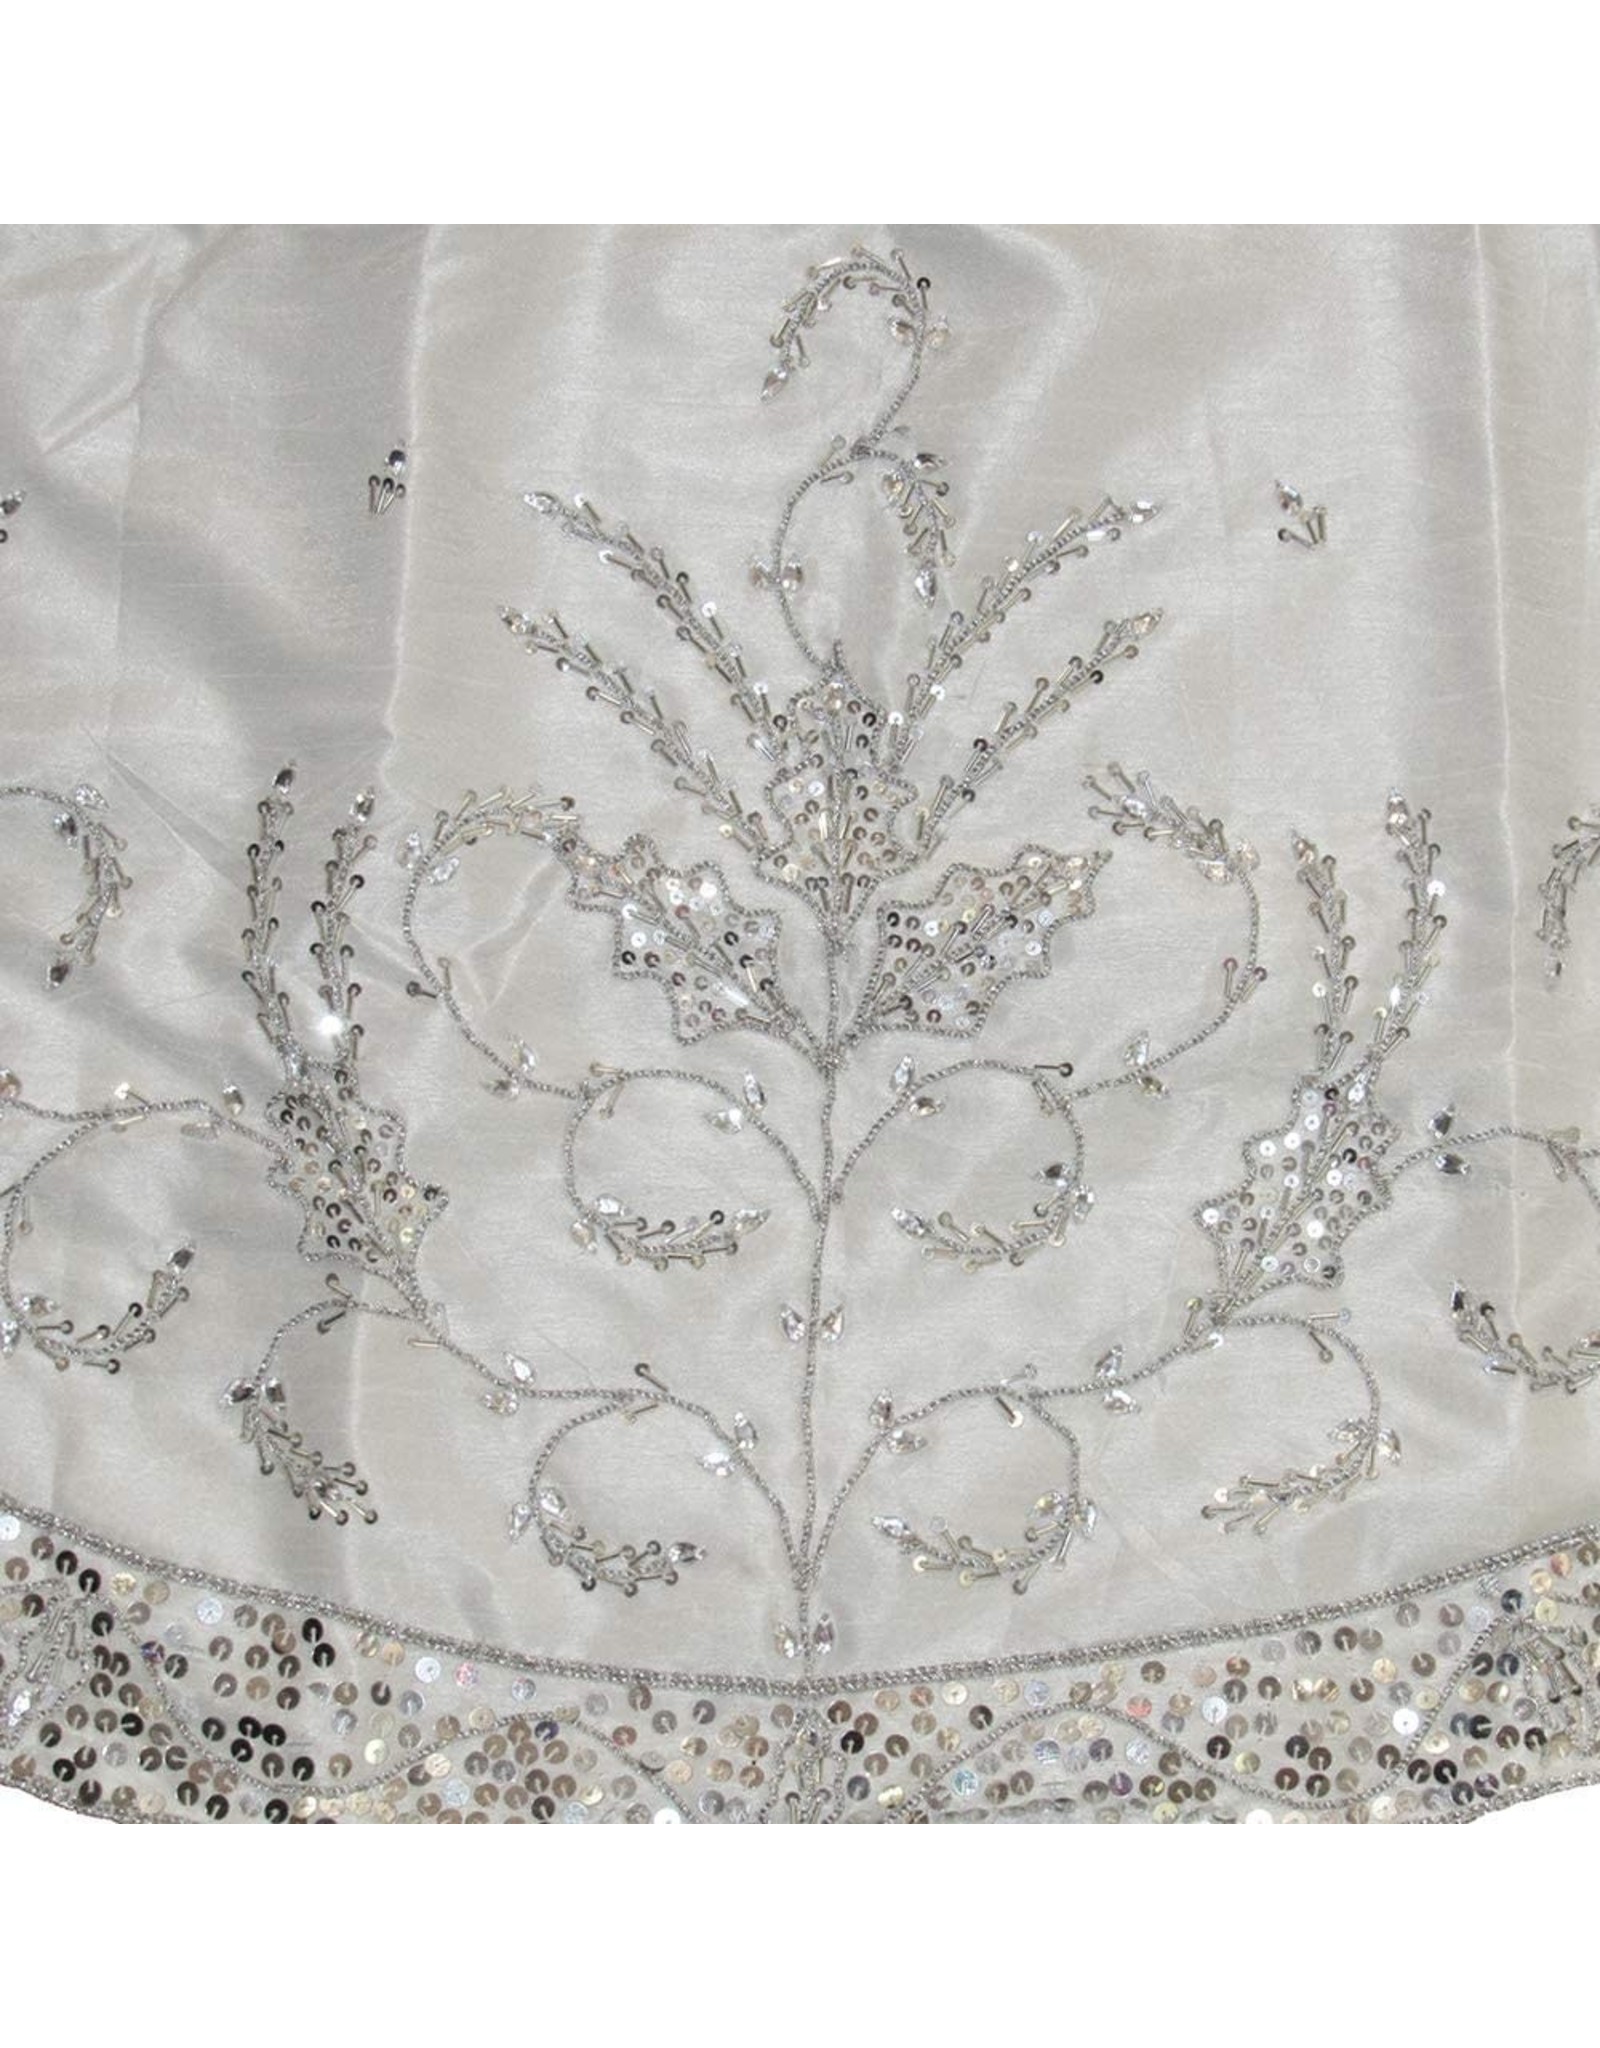 Kurt Adler Christmas Tree Skirt White w Silver Hand Embroidery 48 inch Dia.